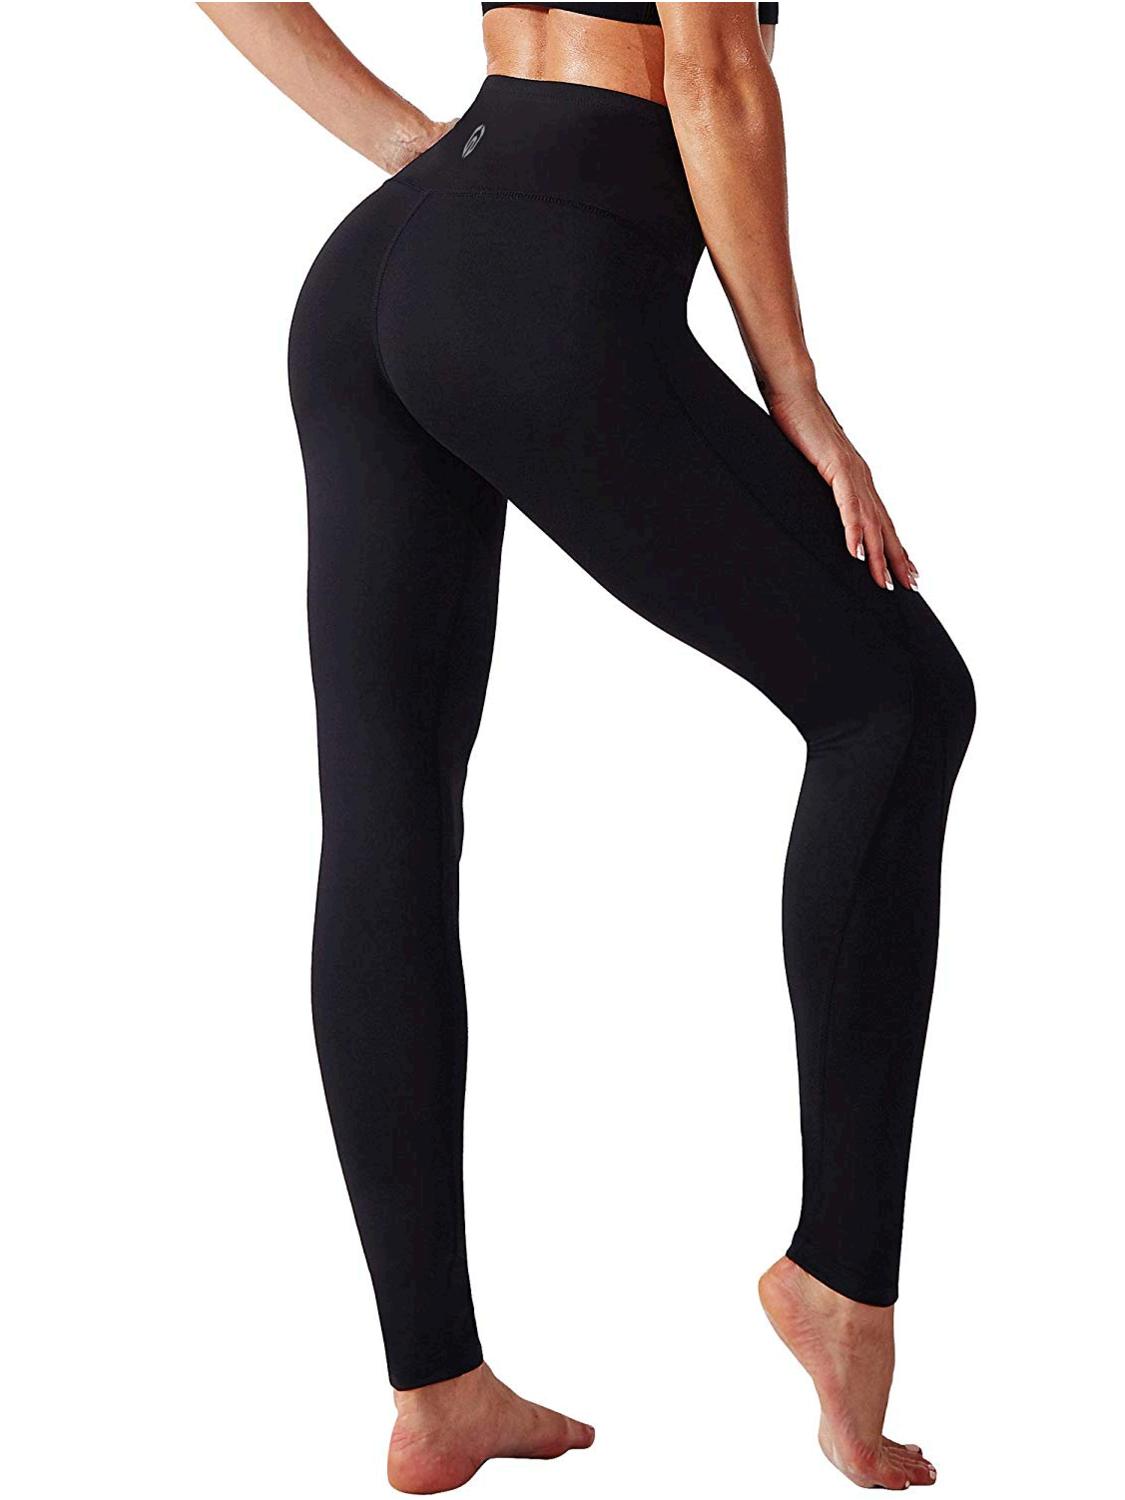  NELEUS Womens Yoga Pant Running Workout Leggings